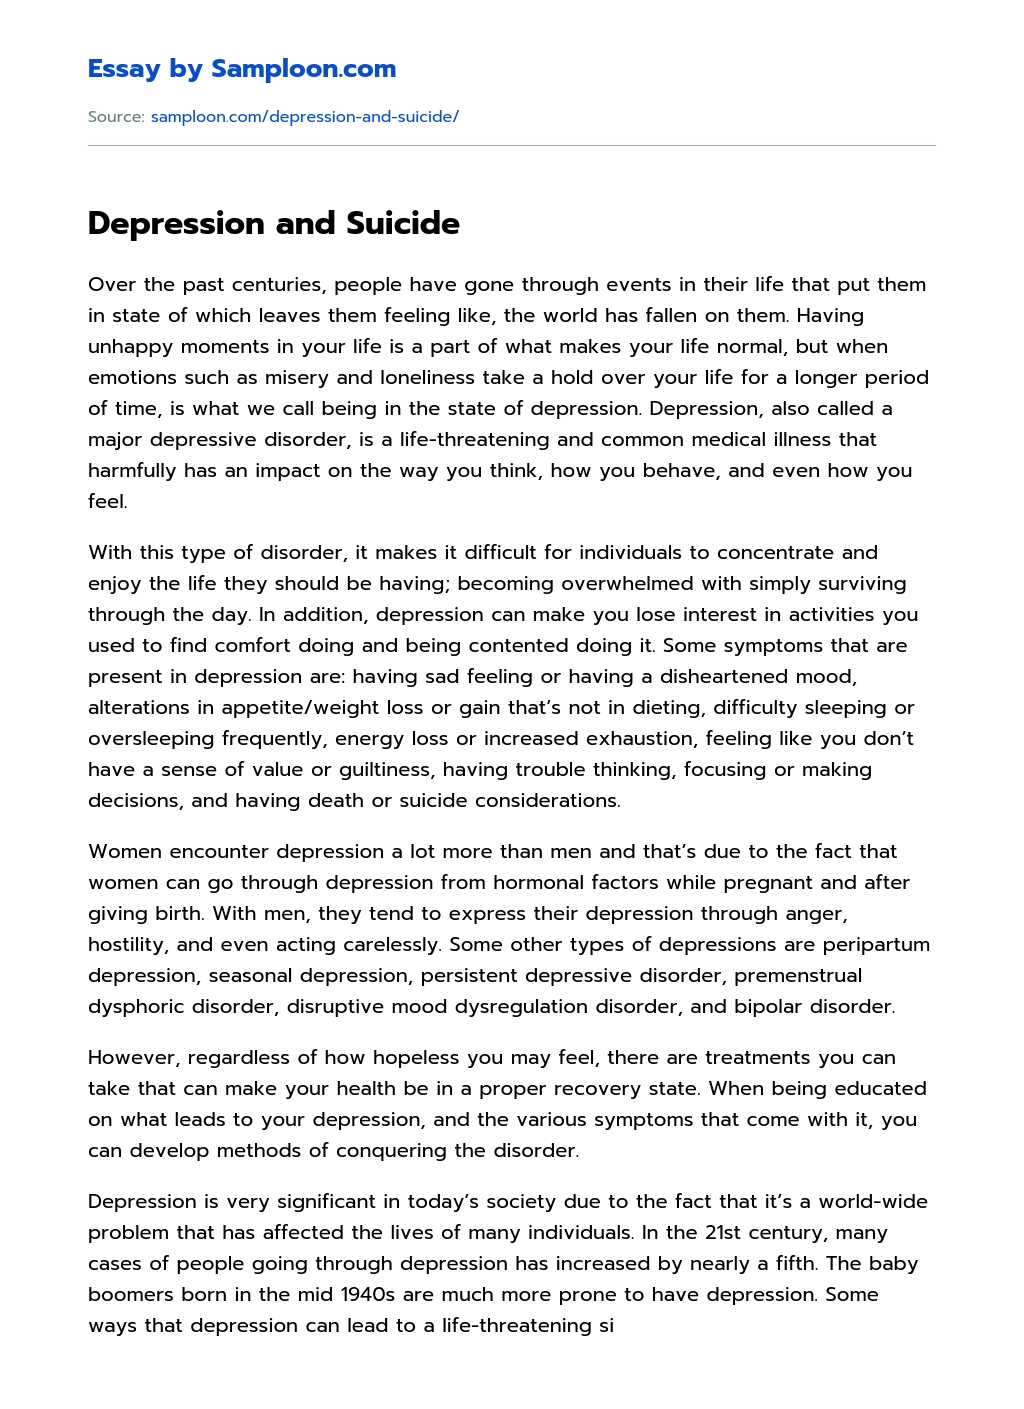 Depression and Suicide essay